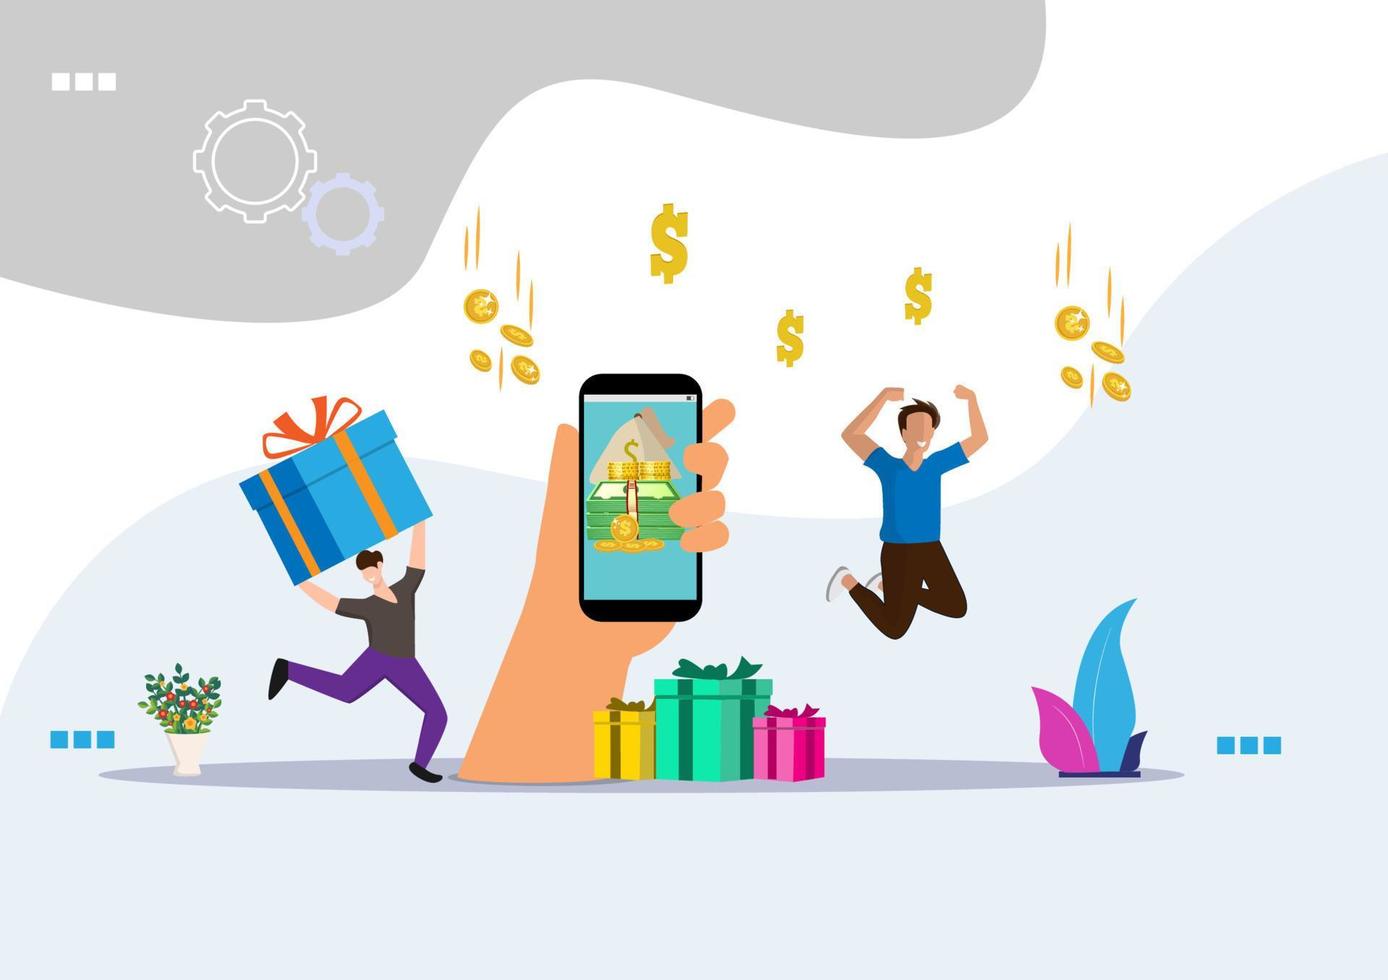 Cash Back concept design, online shopping cash rewards and gifts. Mobile app, banner template. Flat style cartoon illustration vector